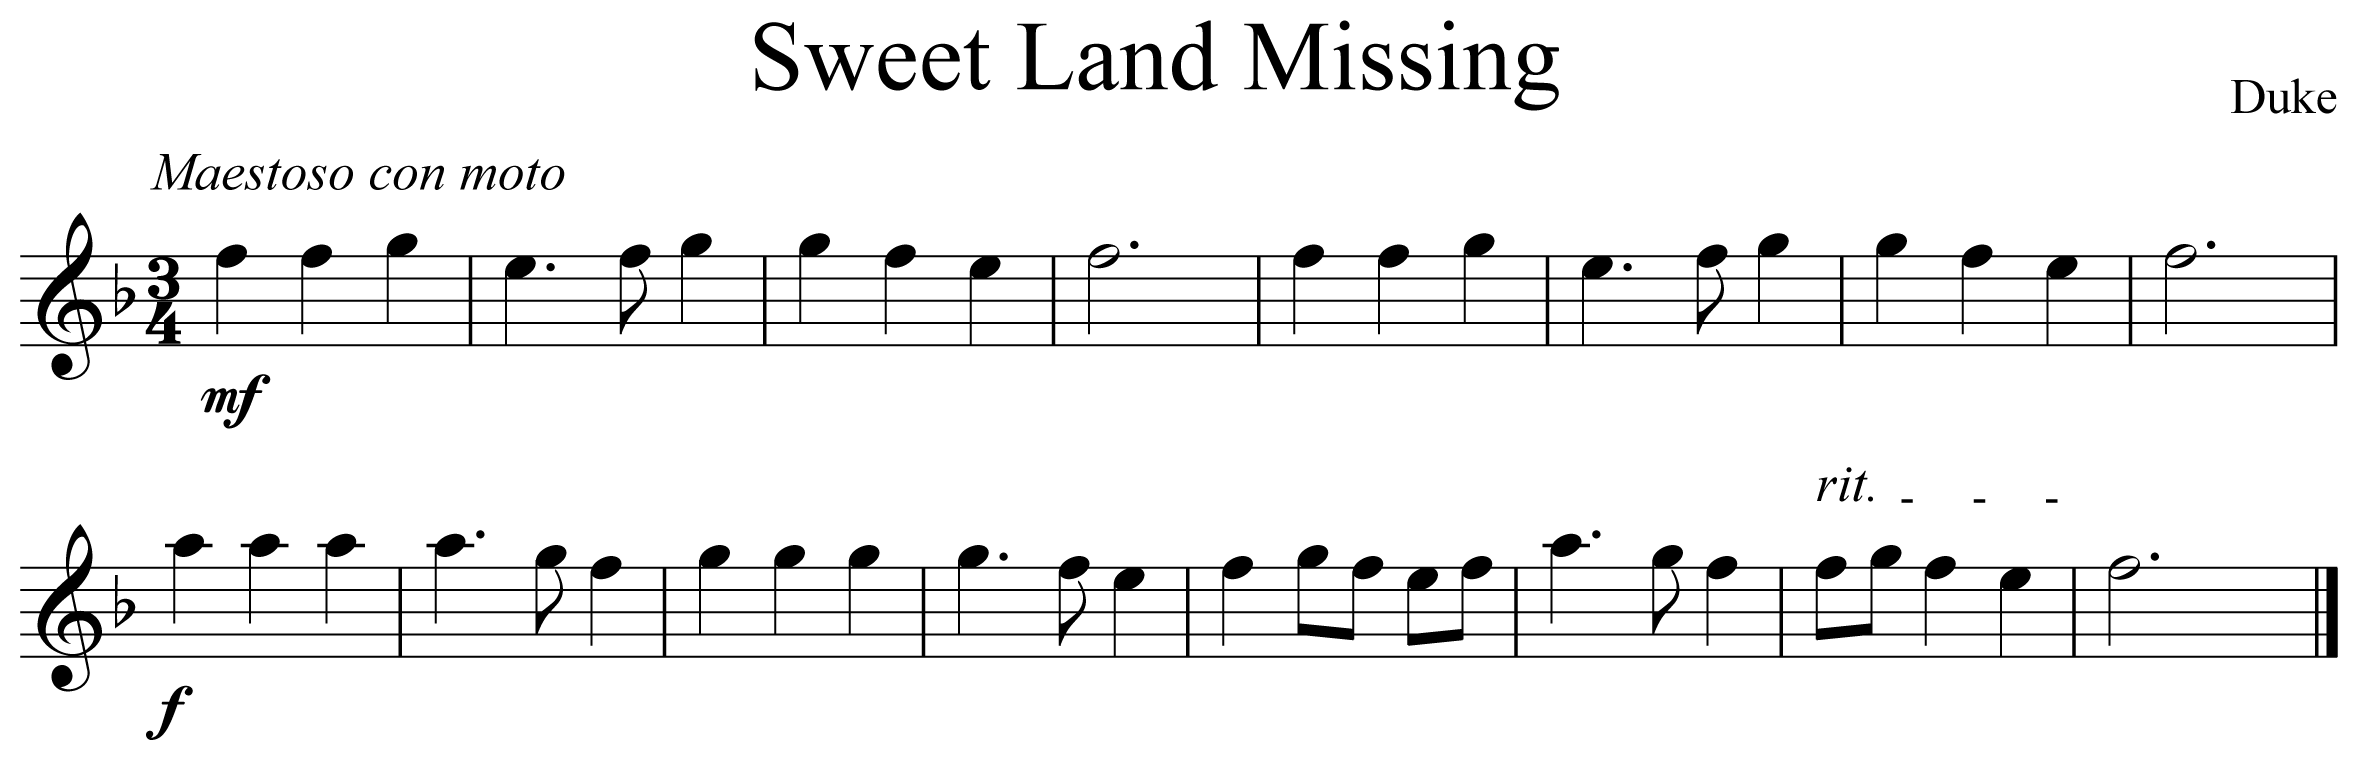 Sweet Land Missing Notation Flute